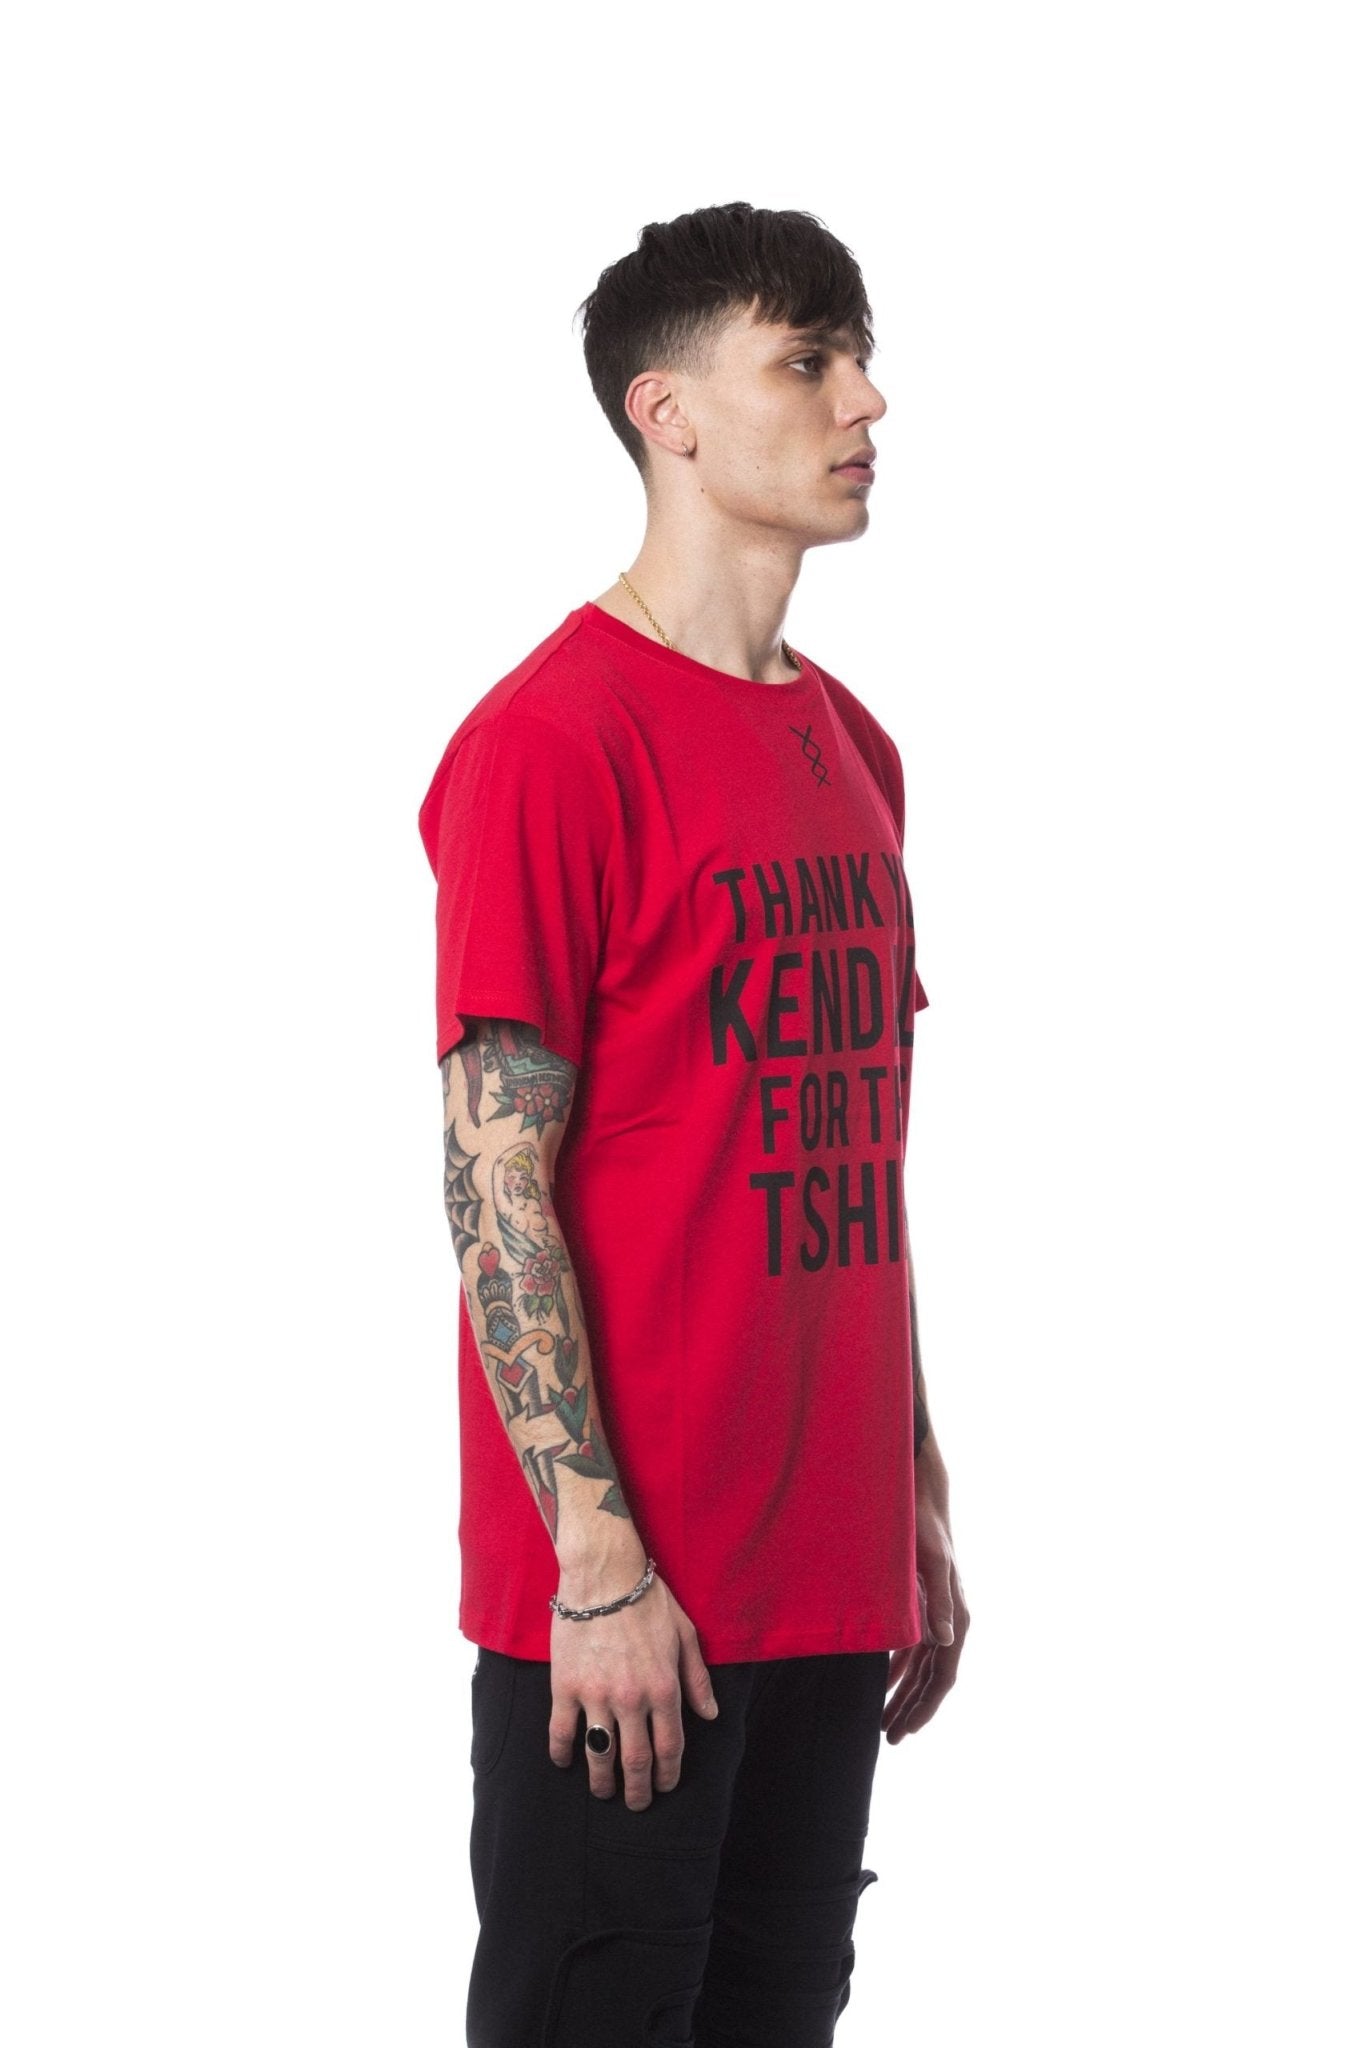 Nicolo Tonetto Red Cotton T-Shirt - Fizigo